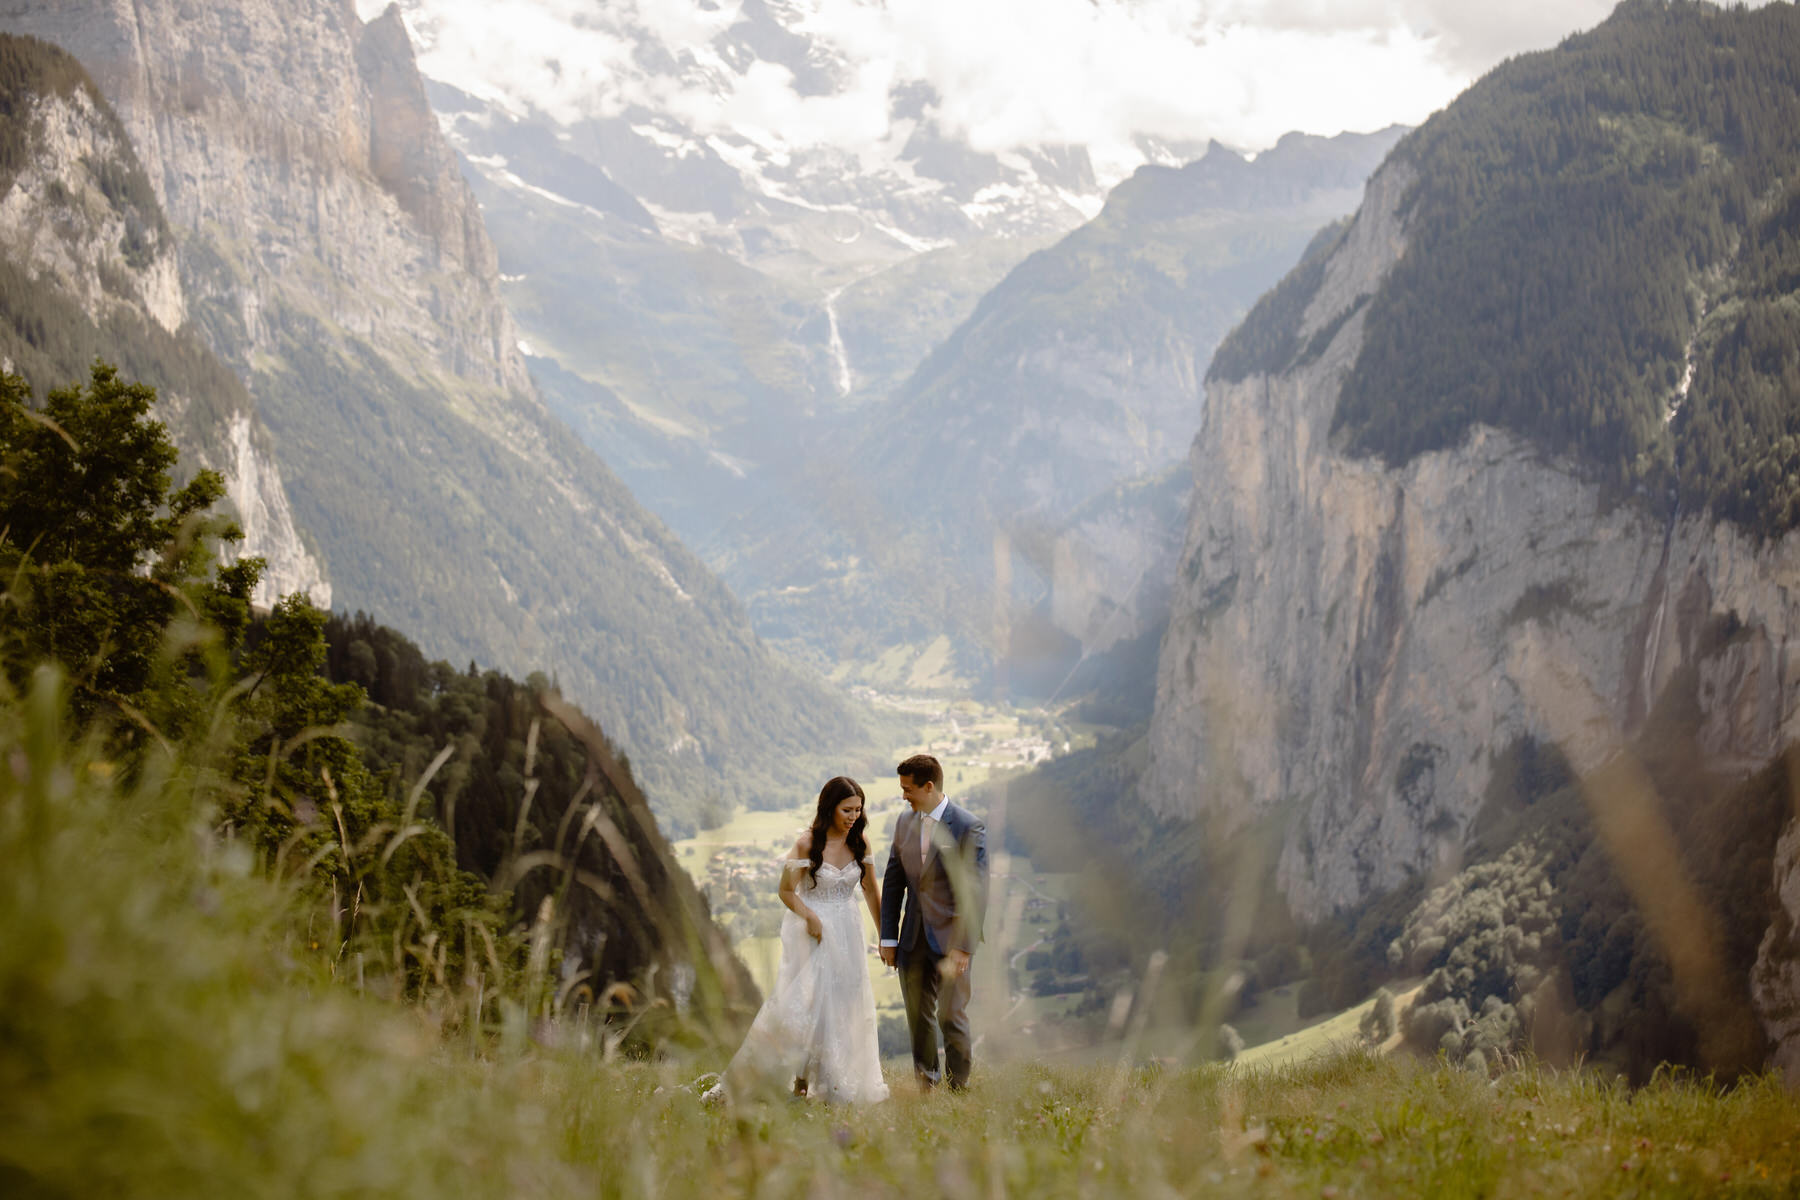 Swiss Alps Lauterbrunnen Switzerland Elopement Wedding 32 | Croatia Elopement Photographer and Videographer